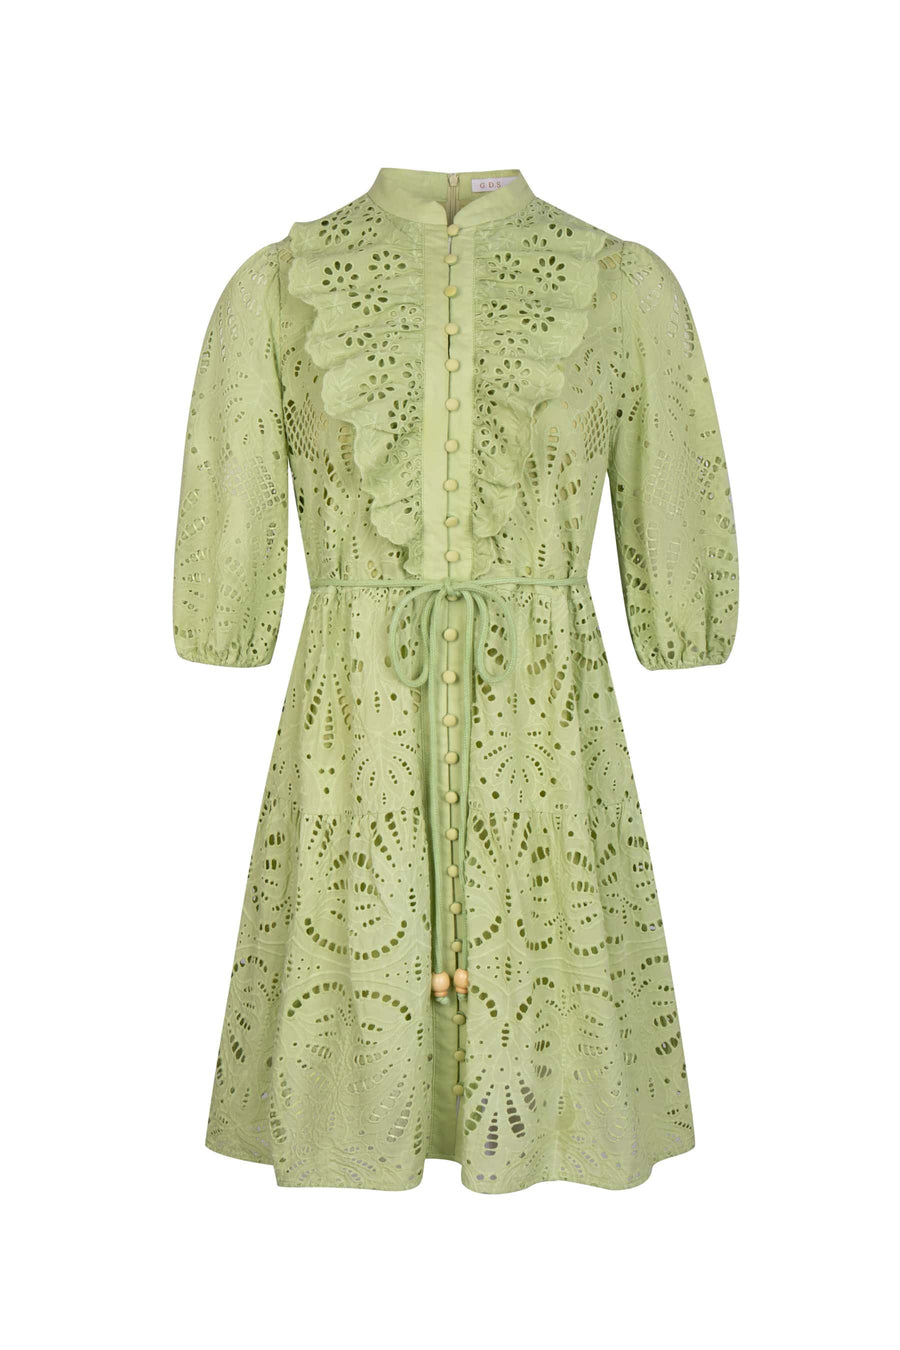 GDS Margot Embroidered Short Dress | Tarragon DRESSES 10 12 14 16 8 GDS GREEN L M S XL XS